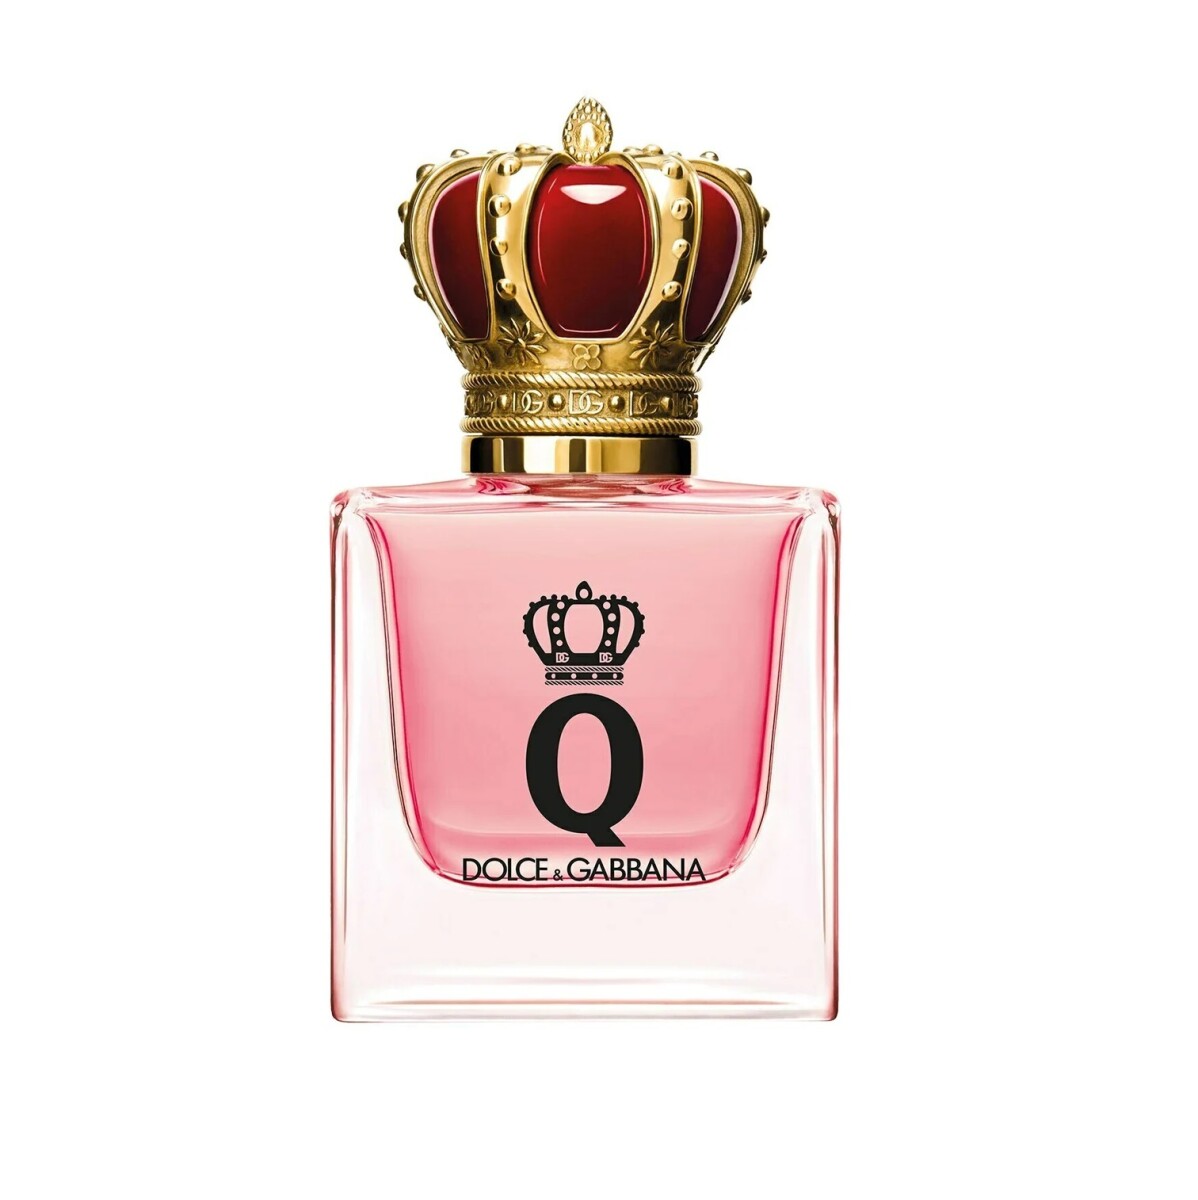 Perfume Dolce & Gabbana Q Edp 30Ml 